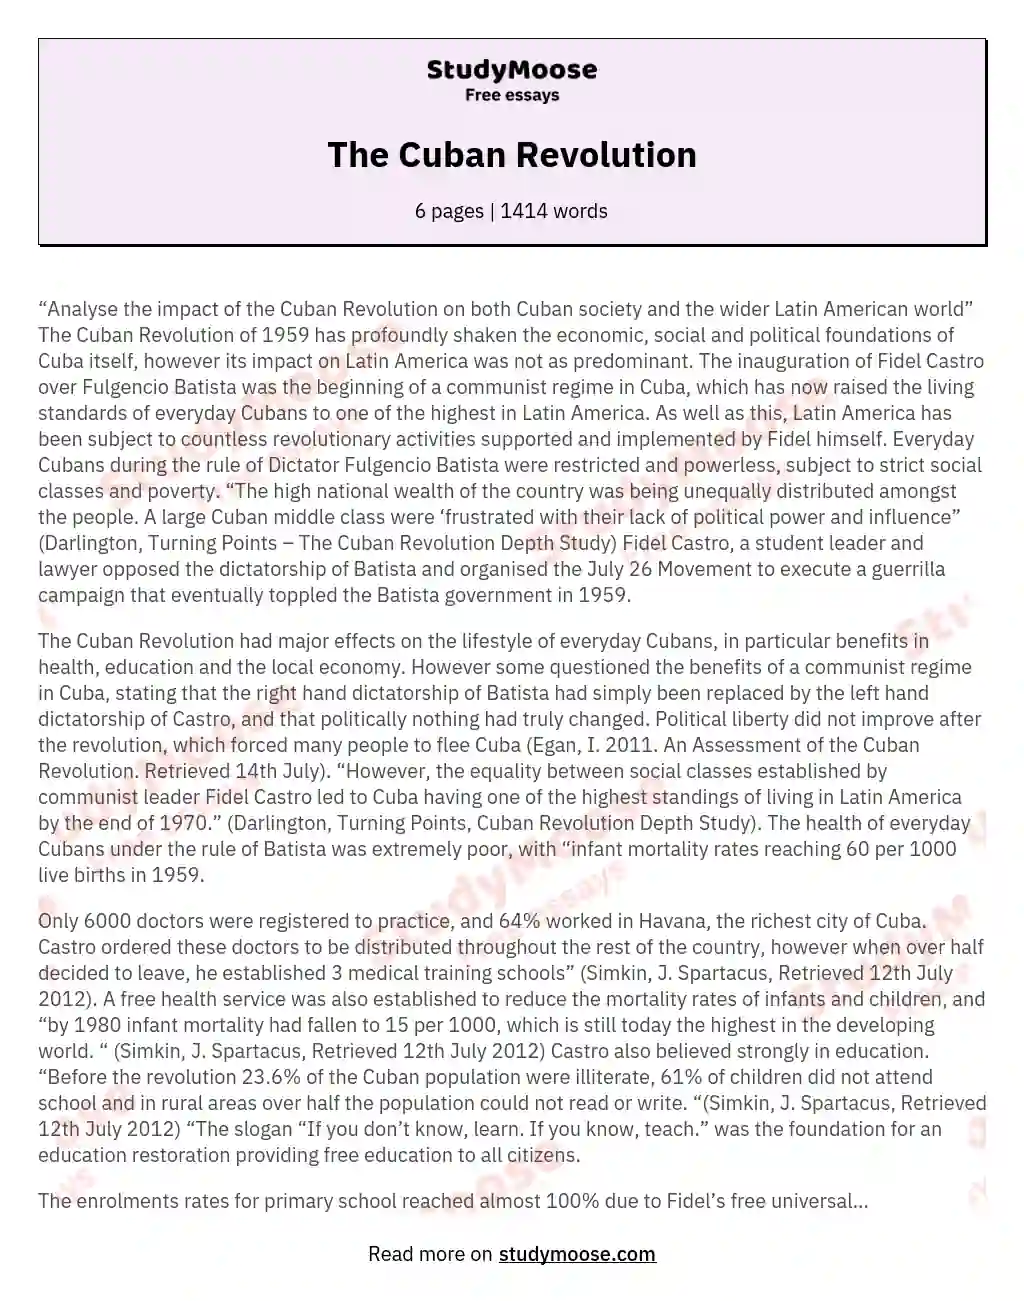 The Cuban Revolution essay